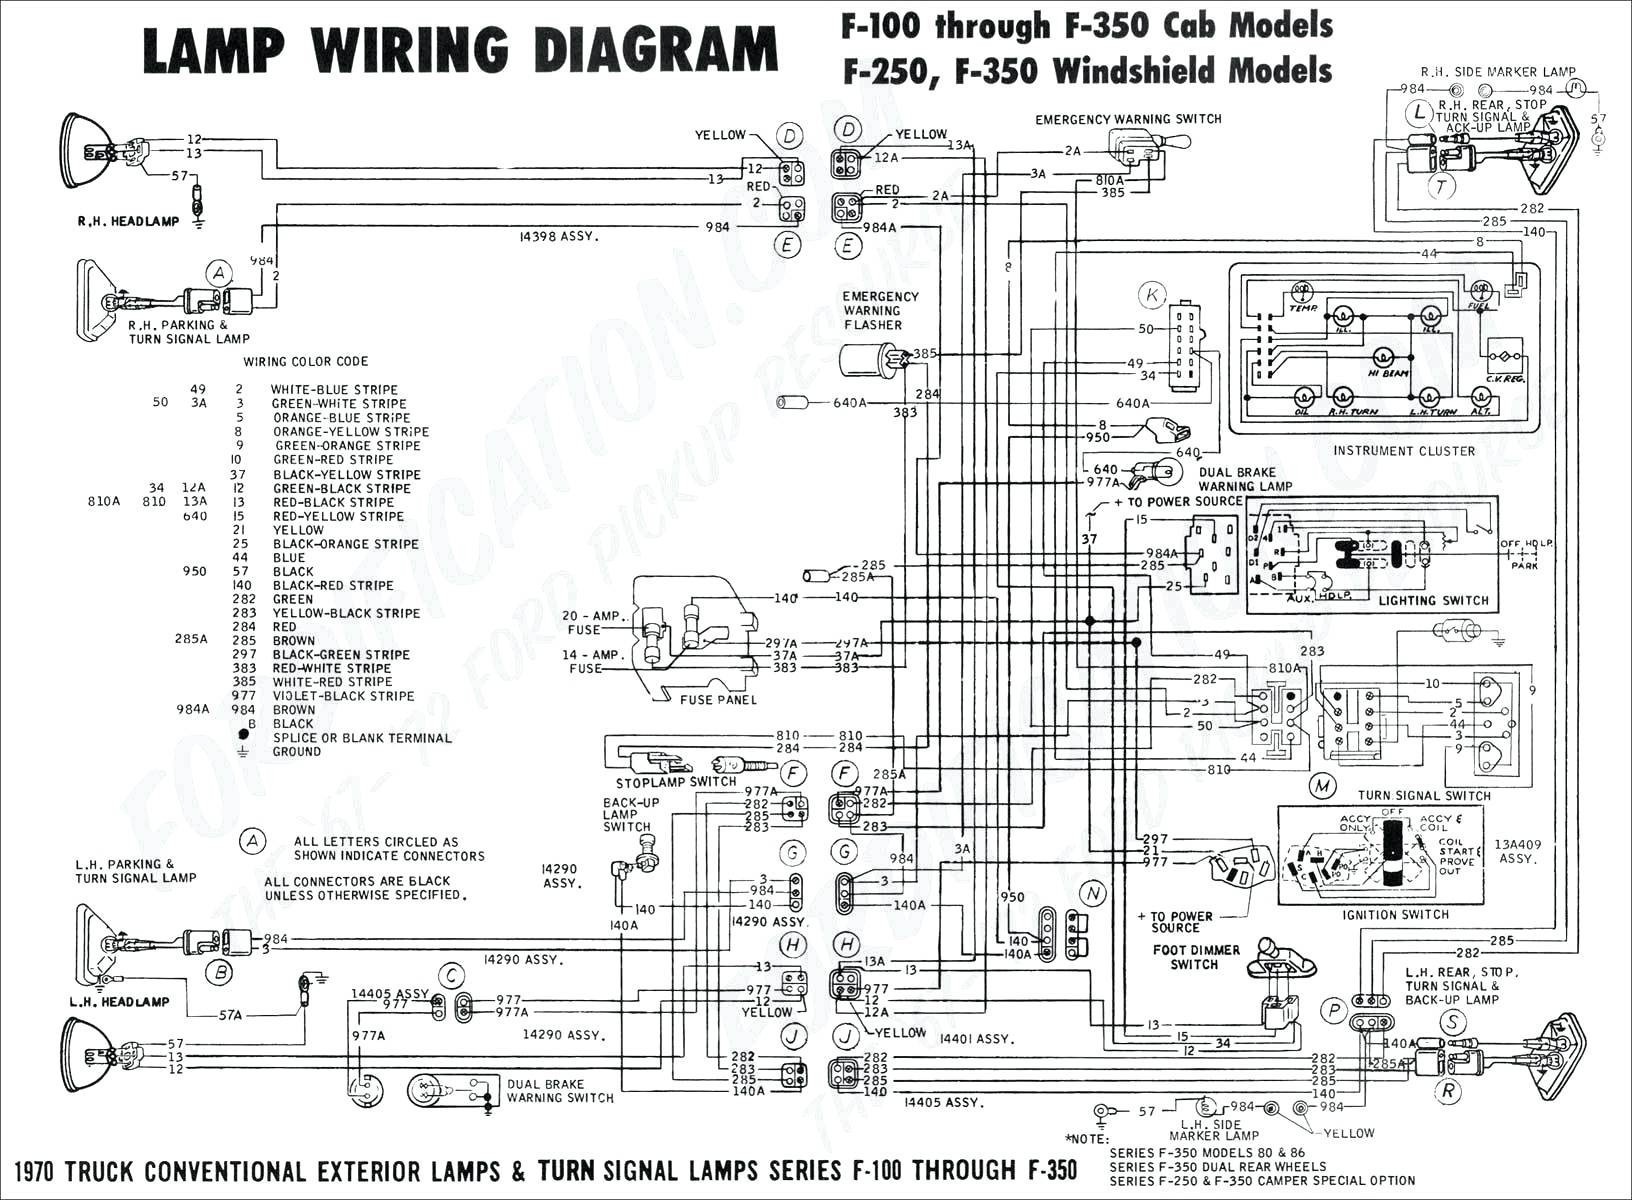 2005 Dodge Ram 1500 Trailer Wiring Diagram Inspirationa 2005 Chevy Silverado Trailer Wiring Diagram ford Resize